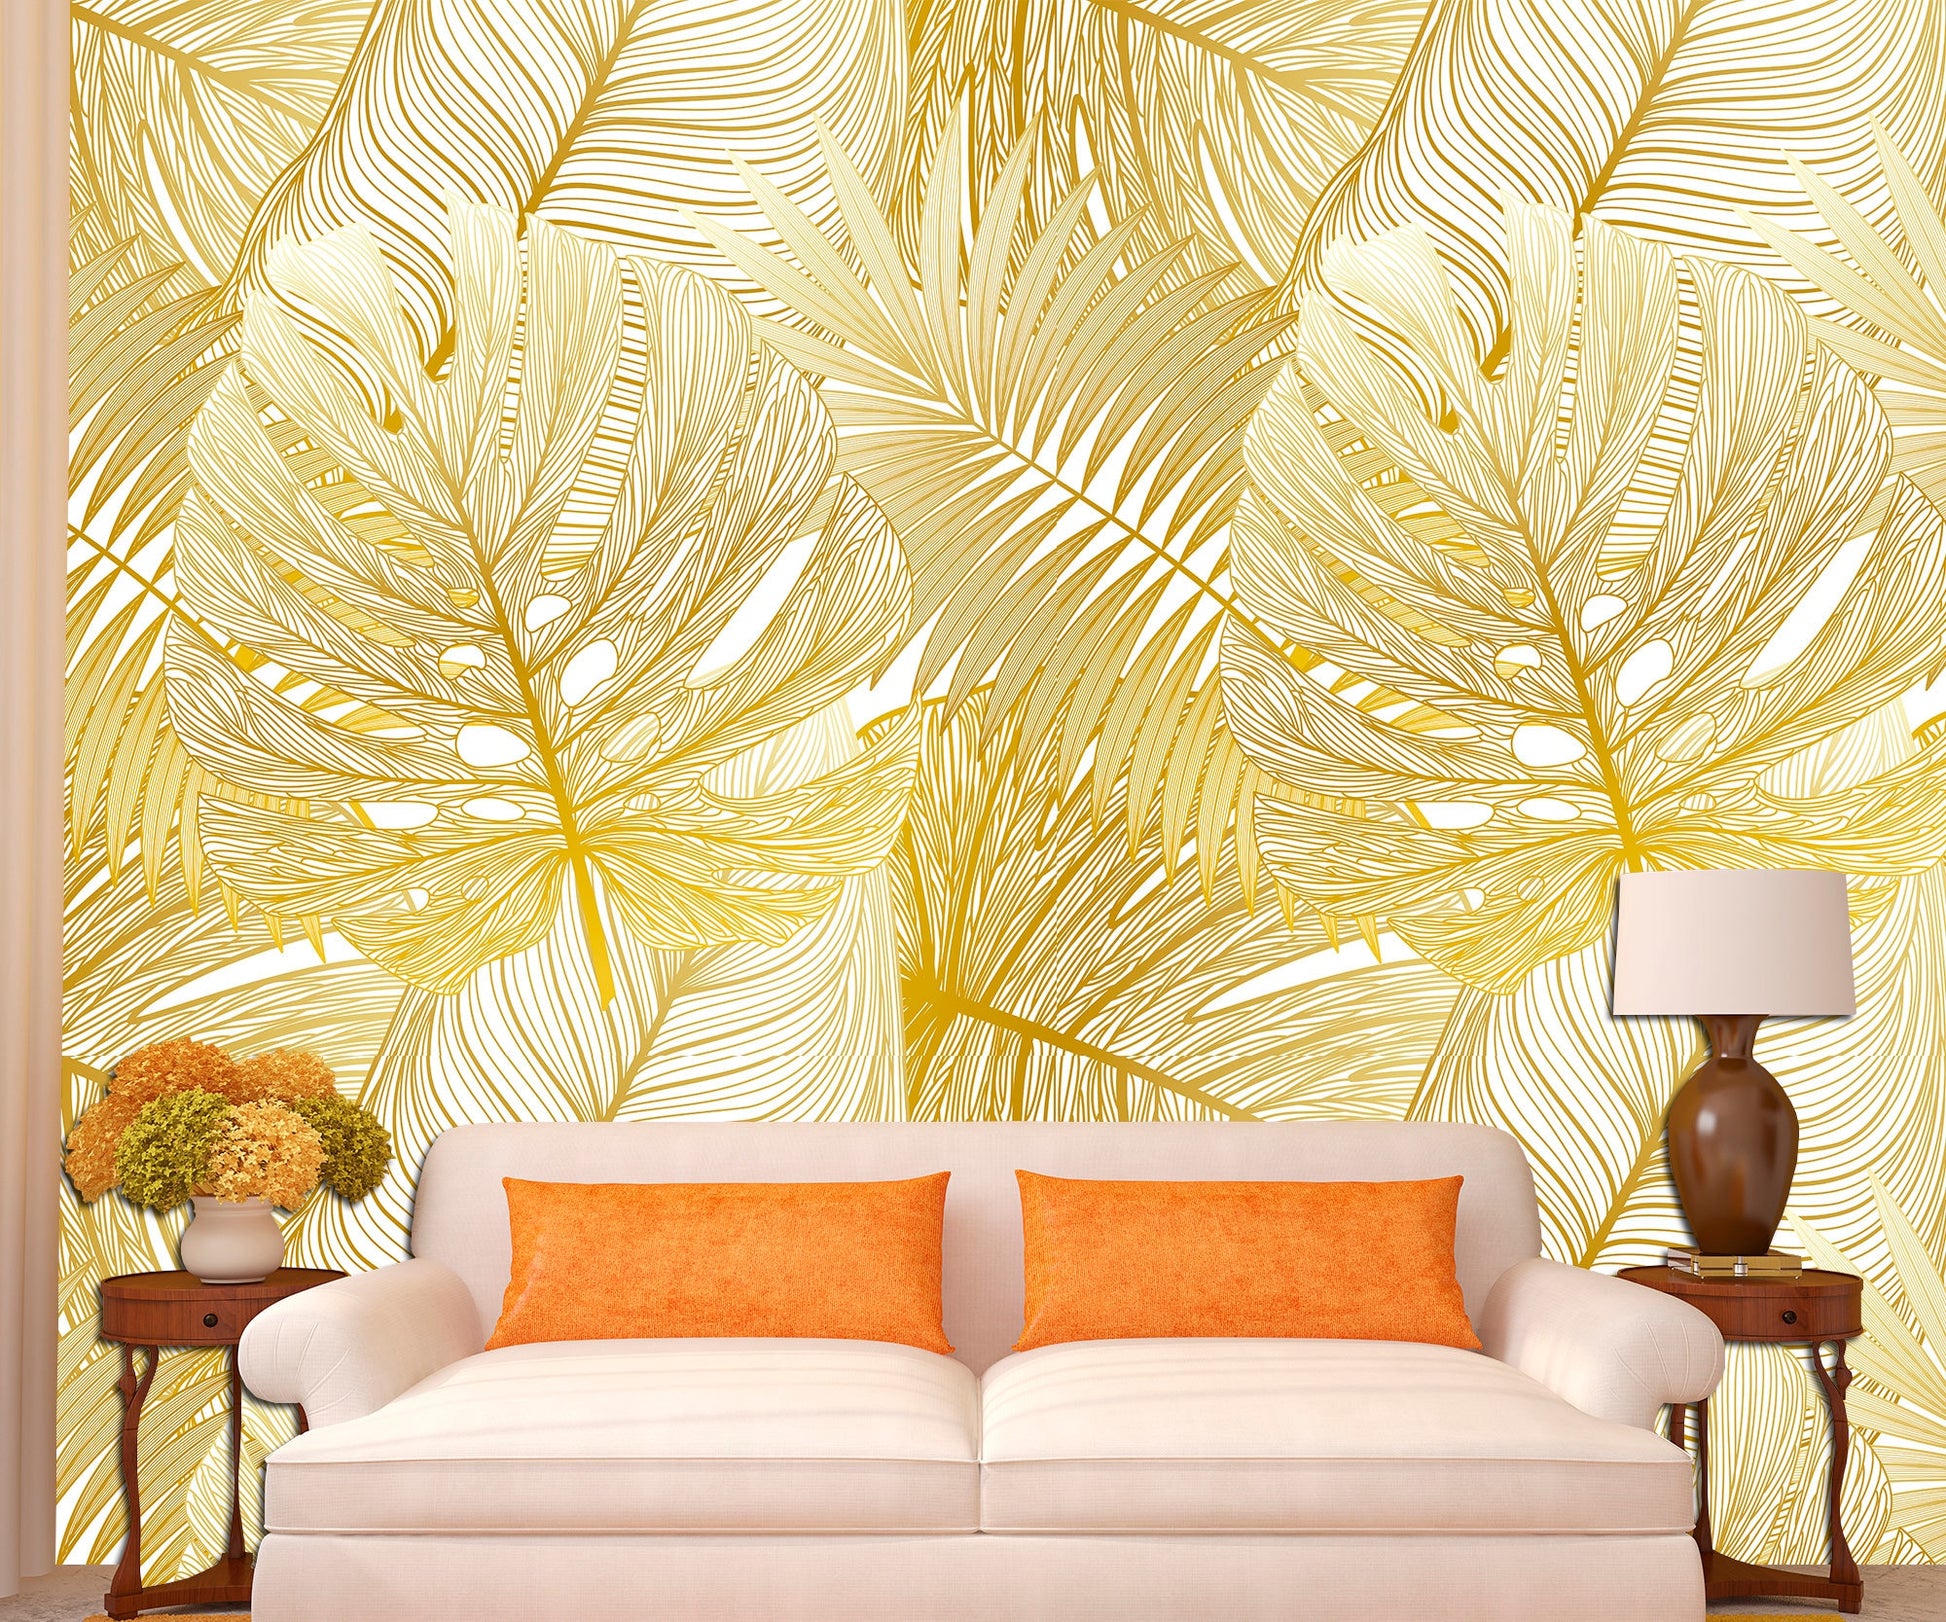 Luxury wall art Removable wallpaper Gold wall decor, Peel stick wallpaper Gold wall art Wallpaper mural Art deco wallpaper